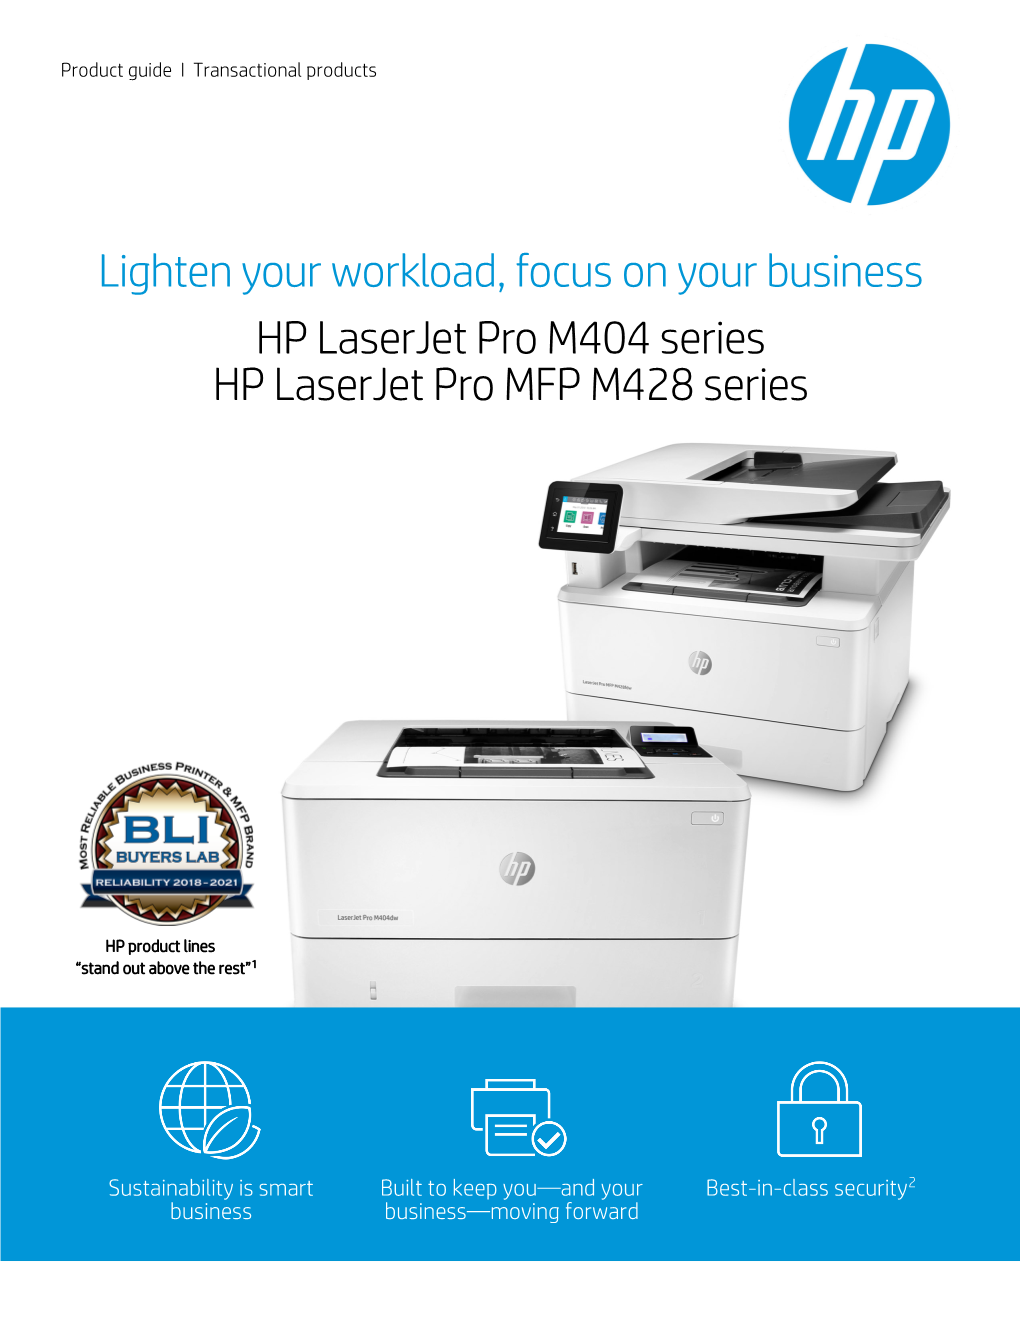 Lighten Your Workload, Focus on Your Business HP Laserjet Pro M404 Series HP Laserjet Pro MFP M428 Series